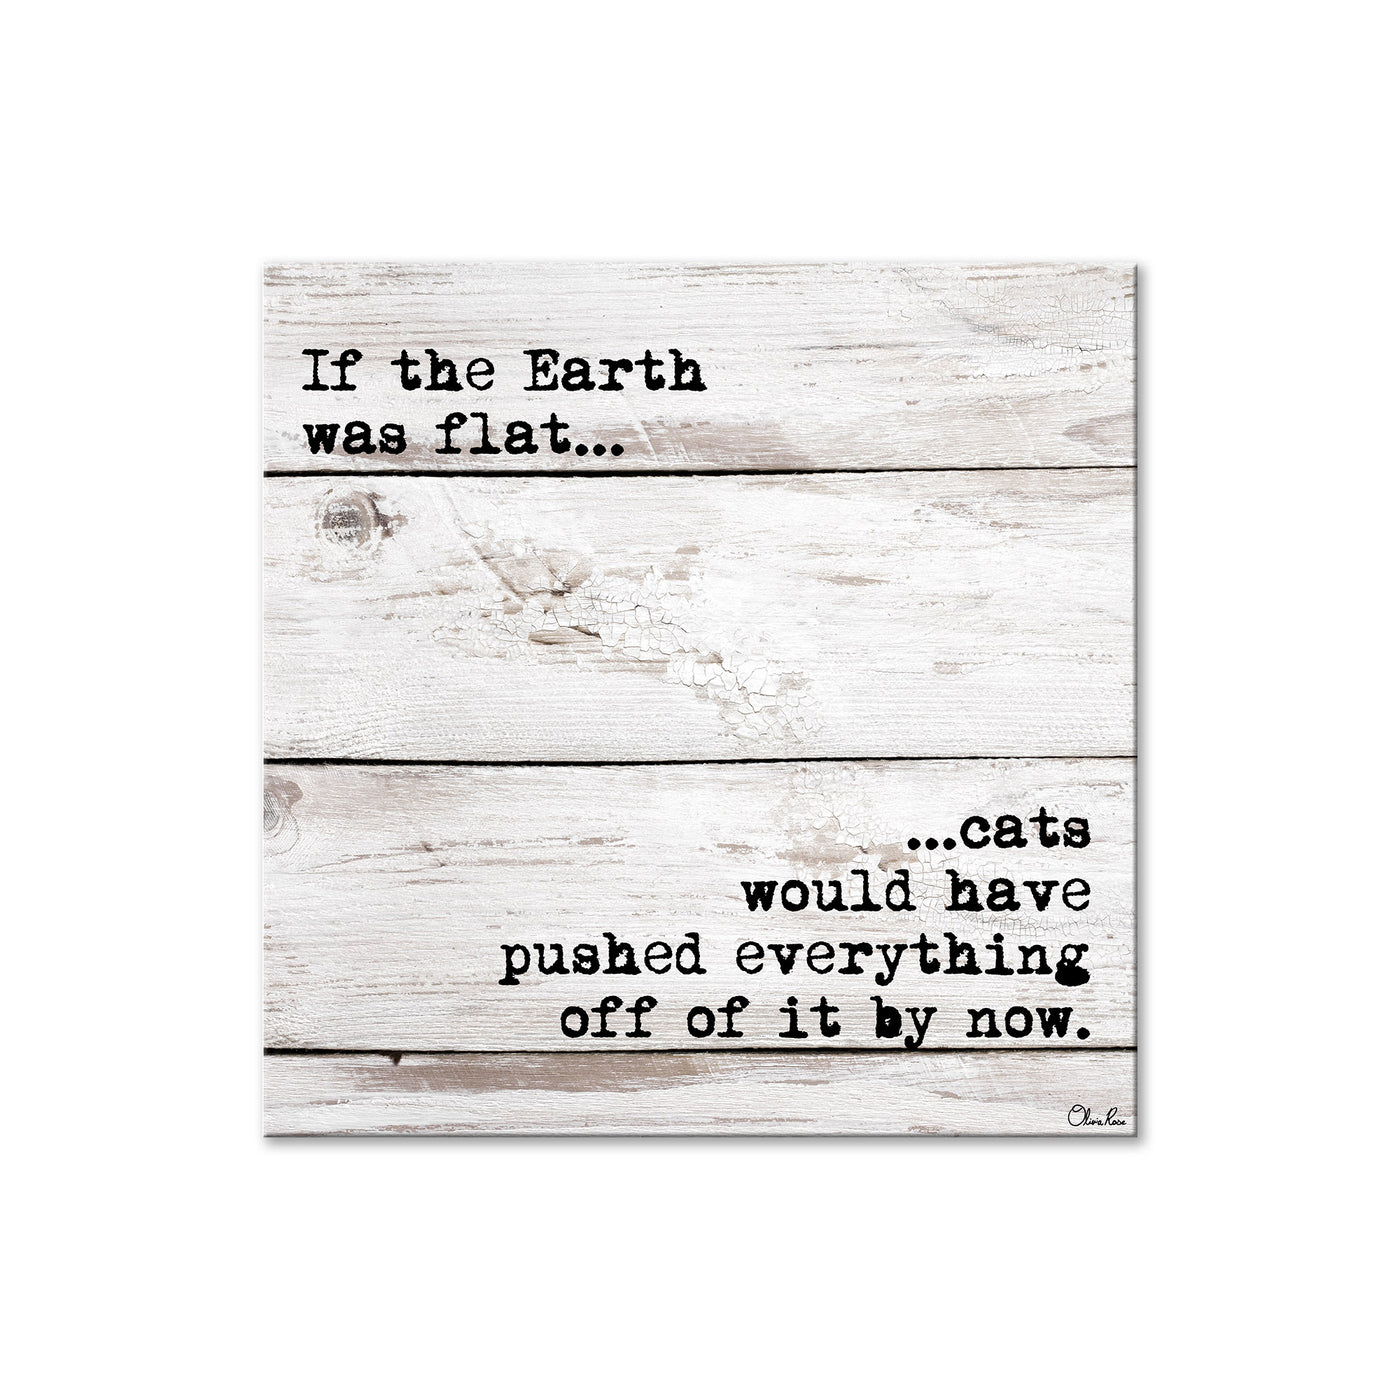 Flat Earth - Cat